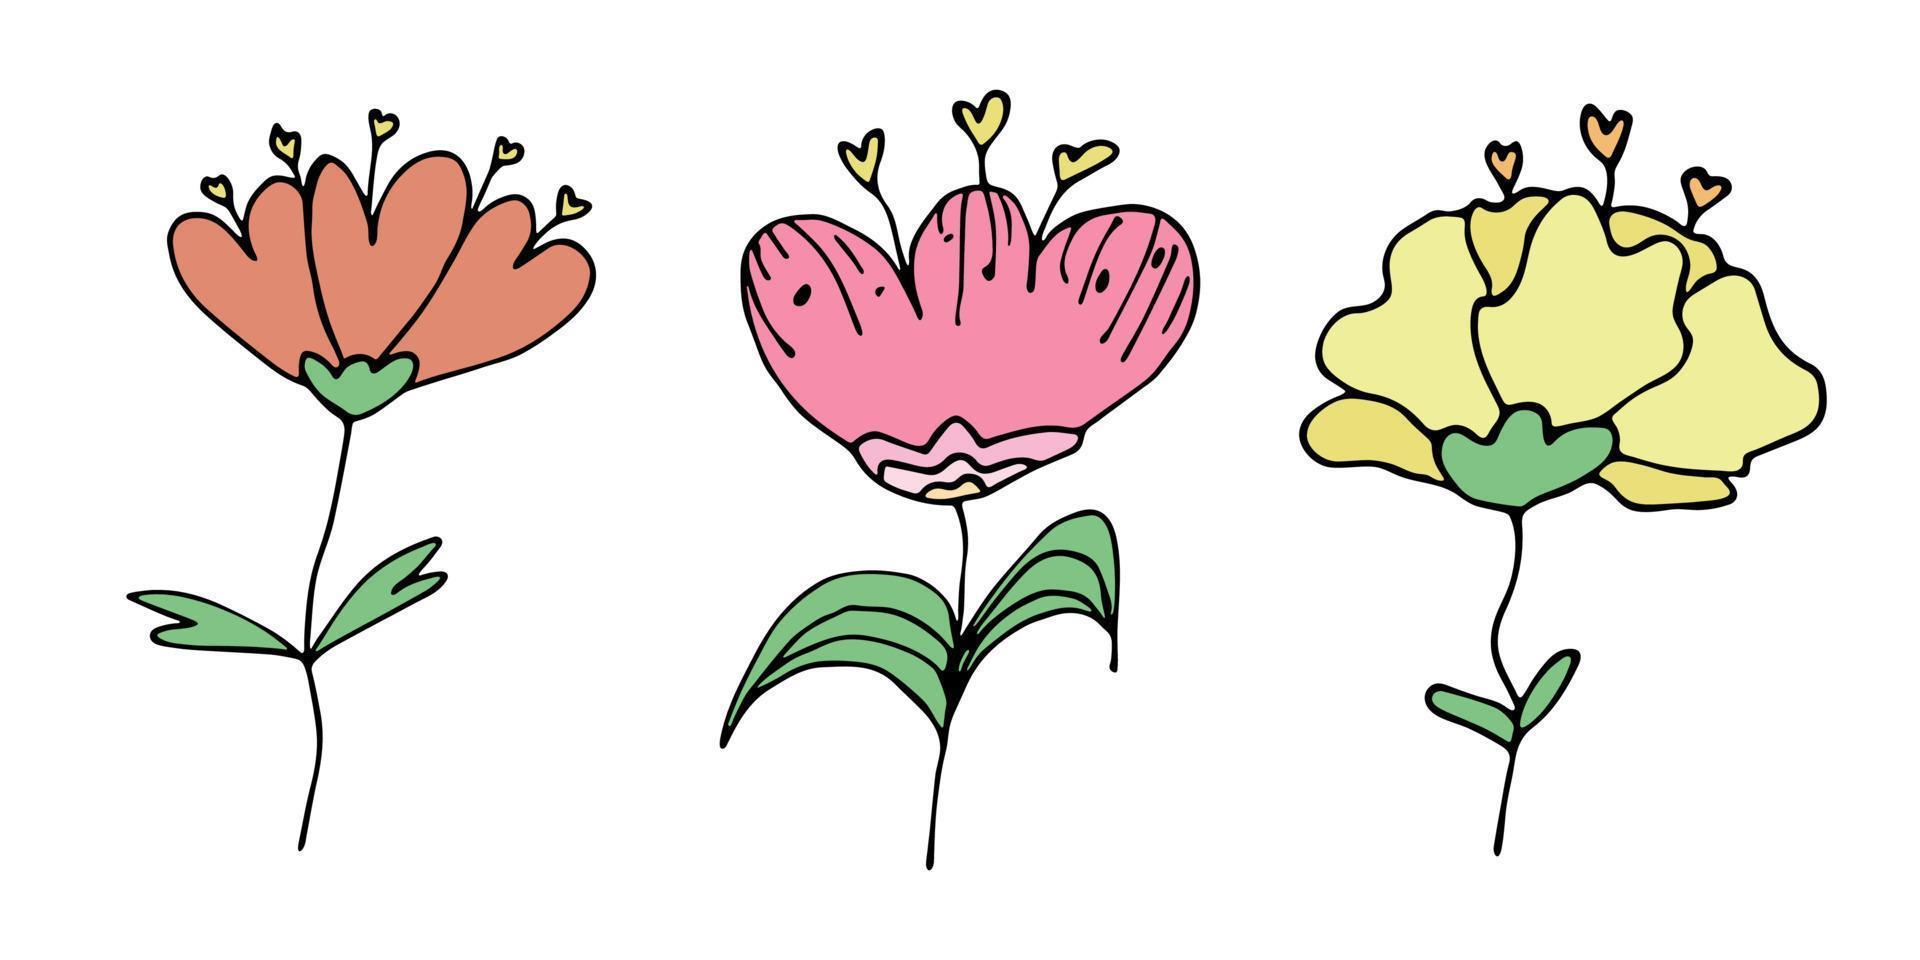 Simple flower clipart. Set of hand drawn floral doodle. For print, web, design, decor, logo vector